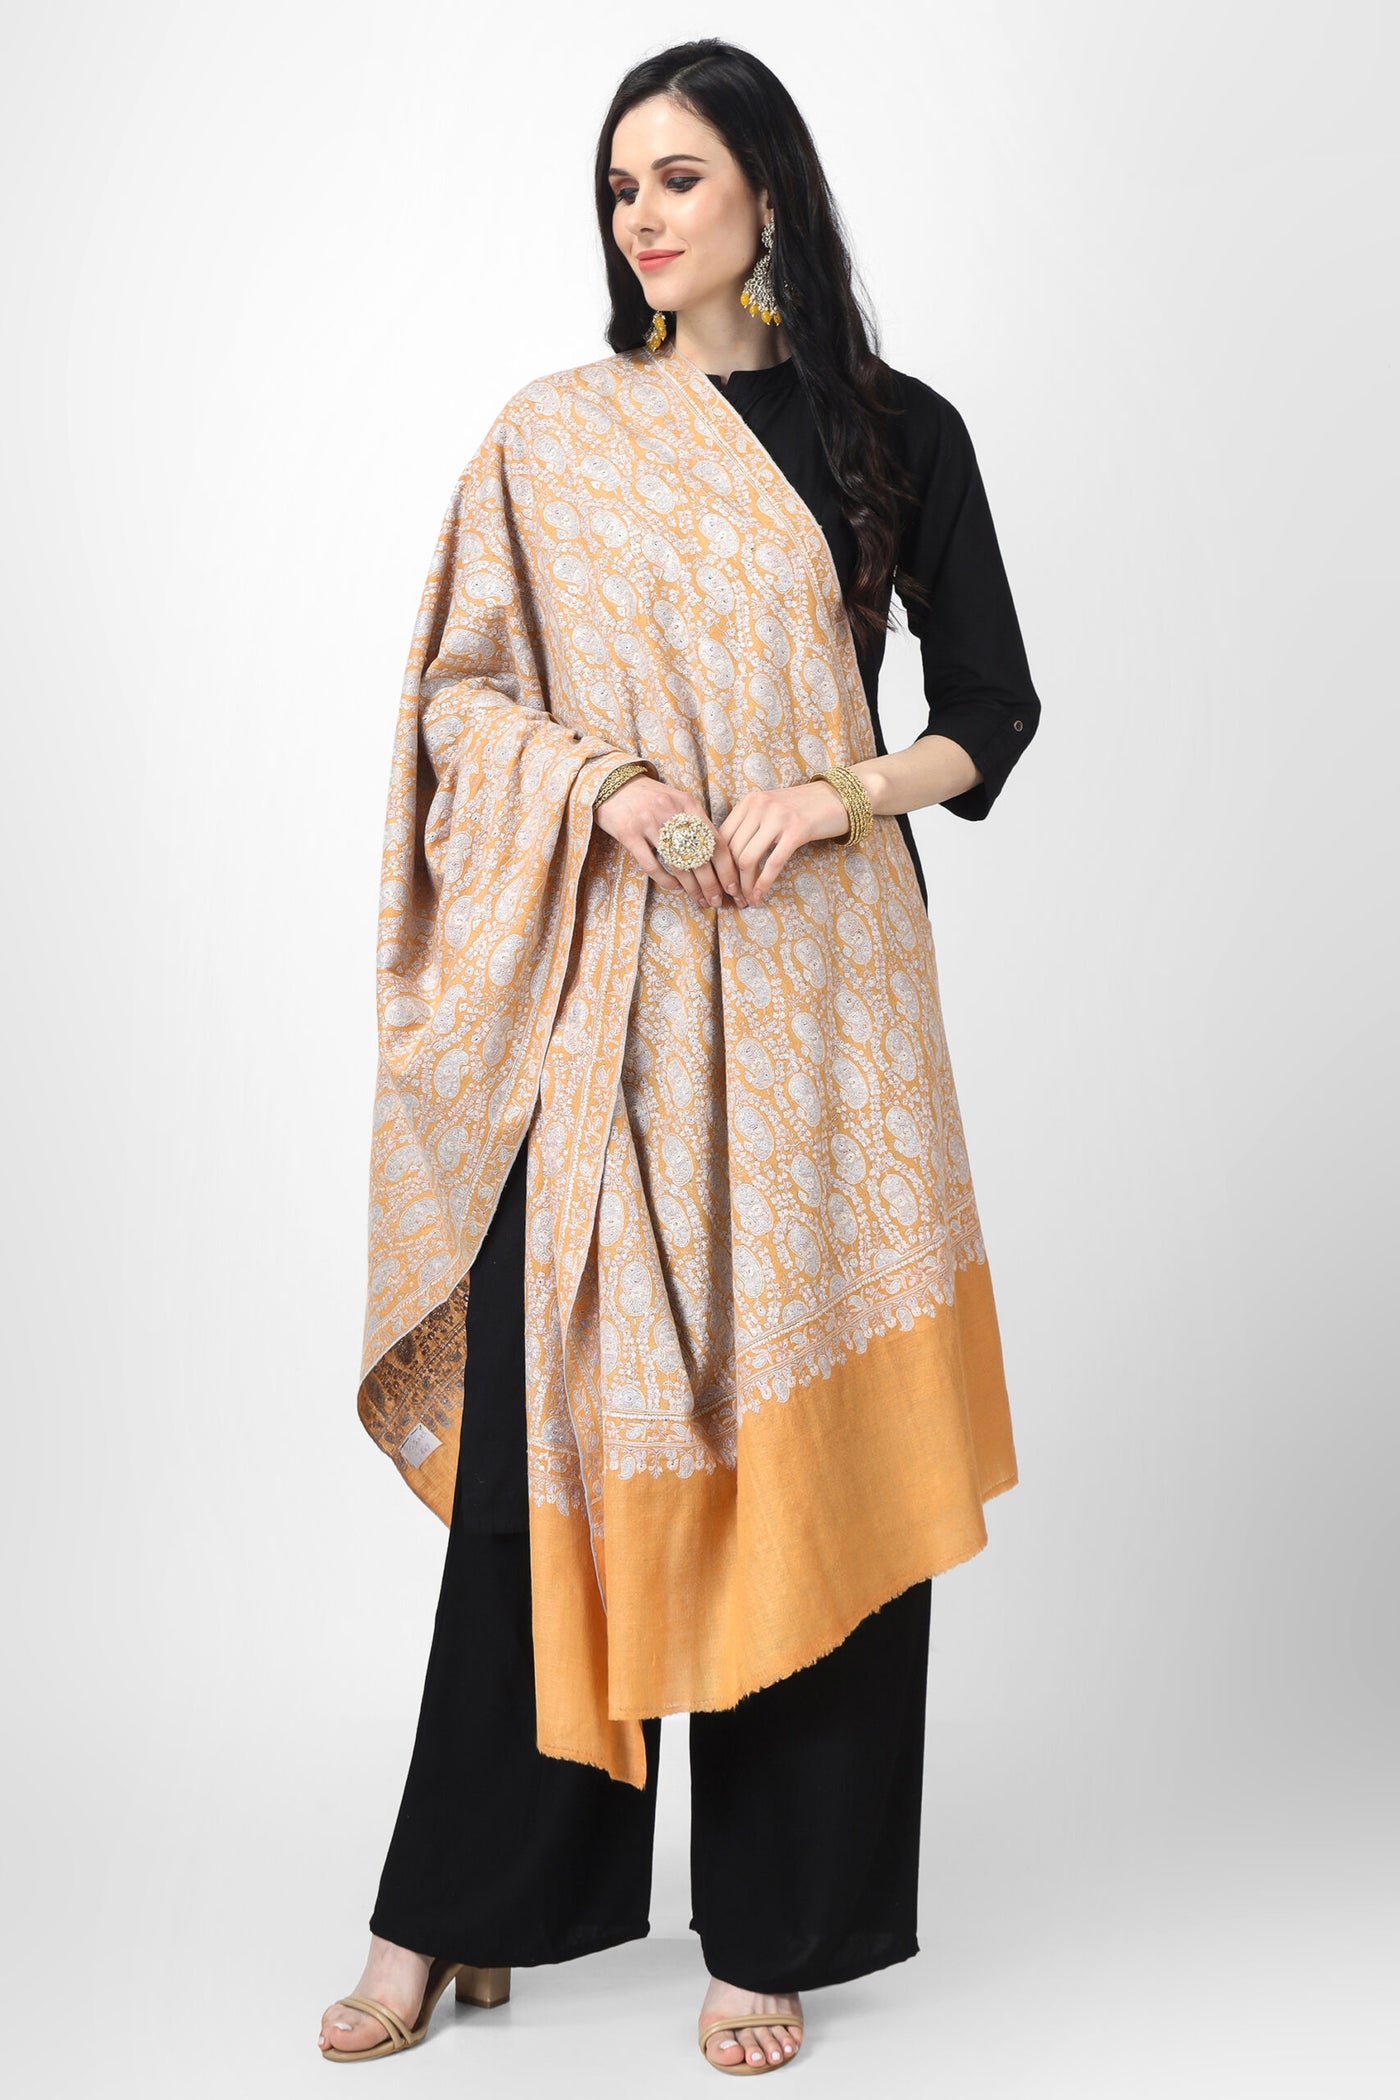 Overall, a Light Orange Pashmina Badami Sozni Jama Shawl would be a luxurious and stylish accessory, showcasing the skill and craftsmanship of Kashmiri weavers and embroiderers.